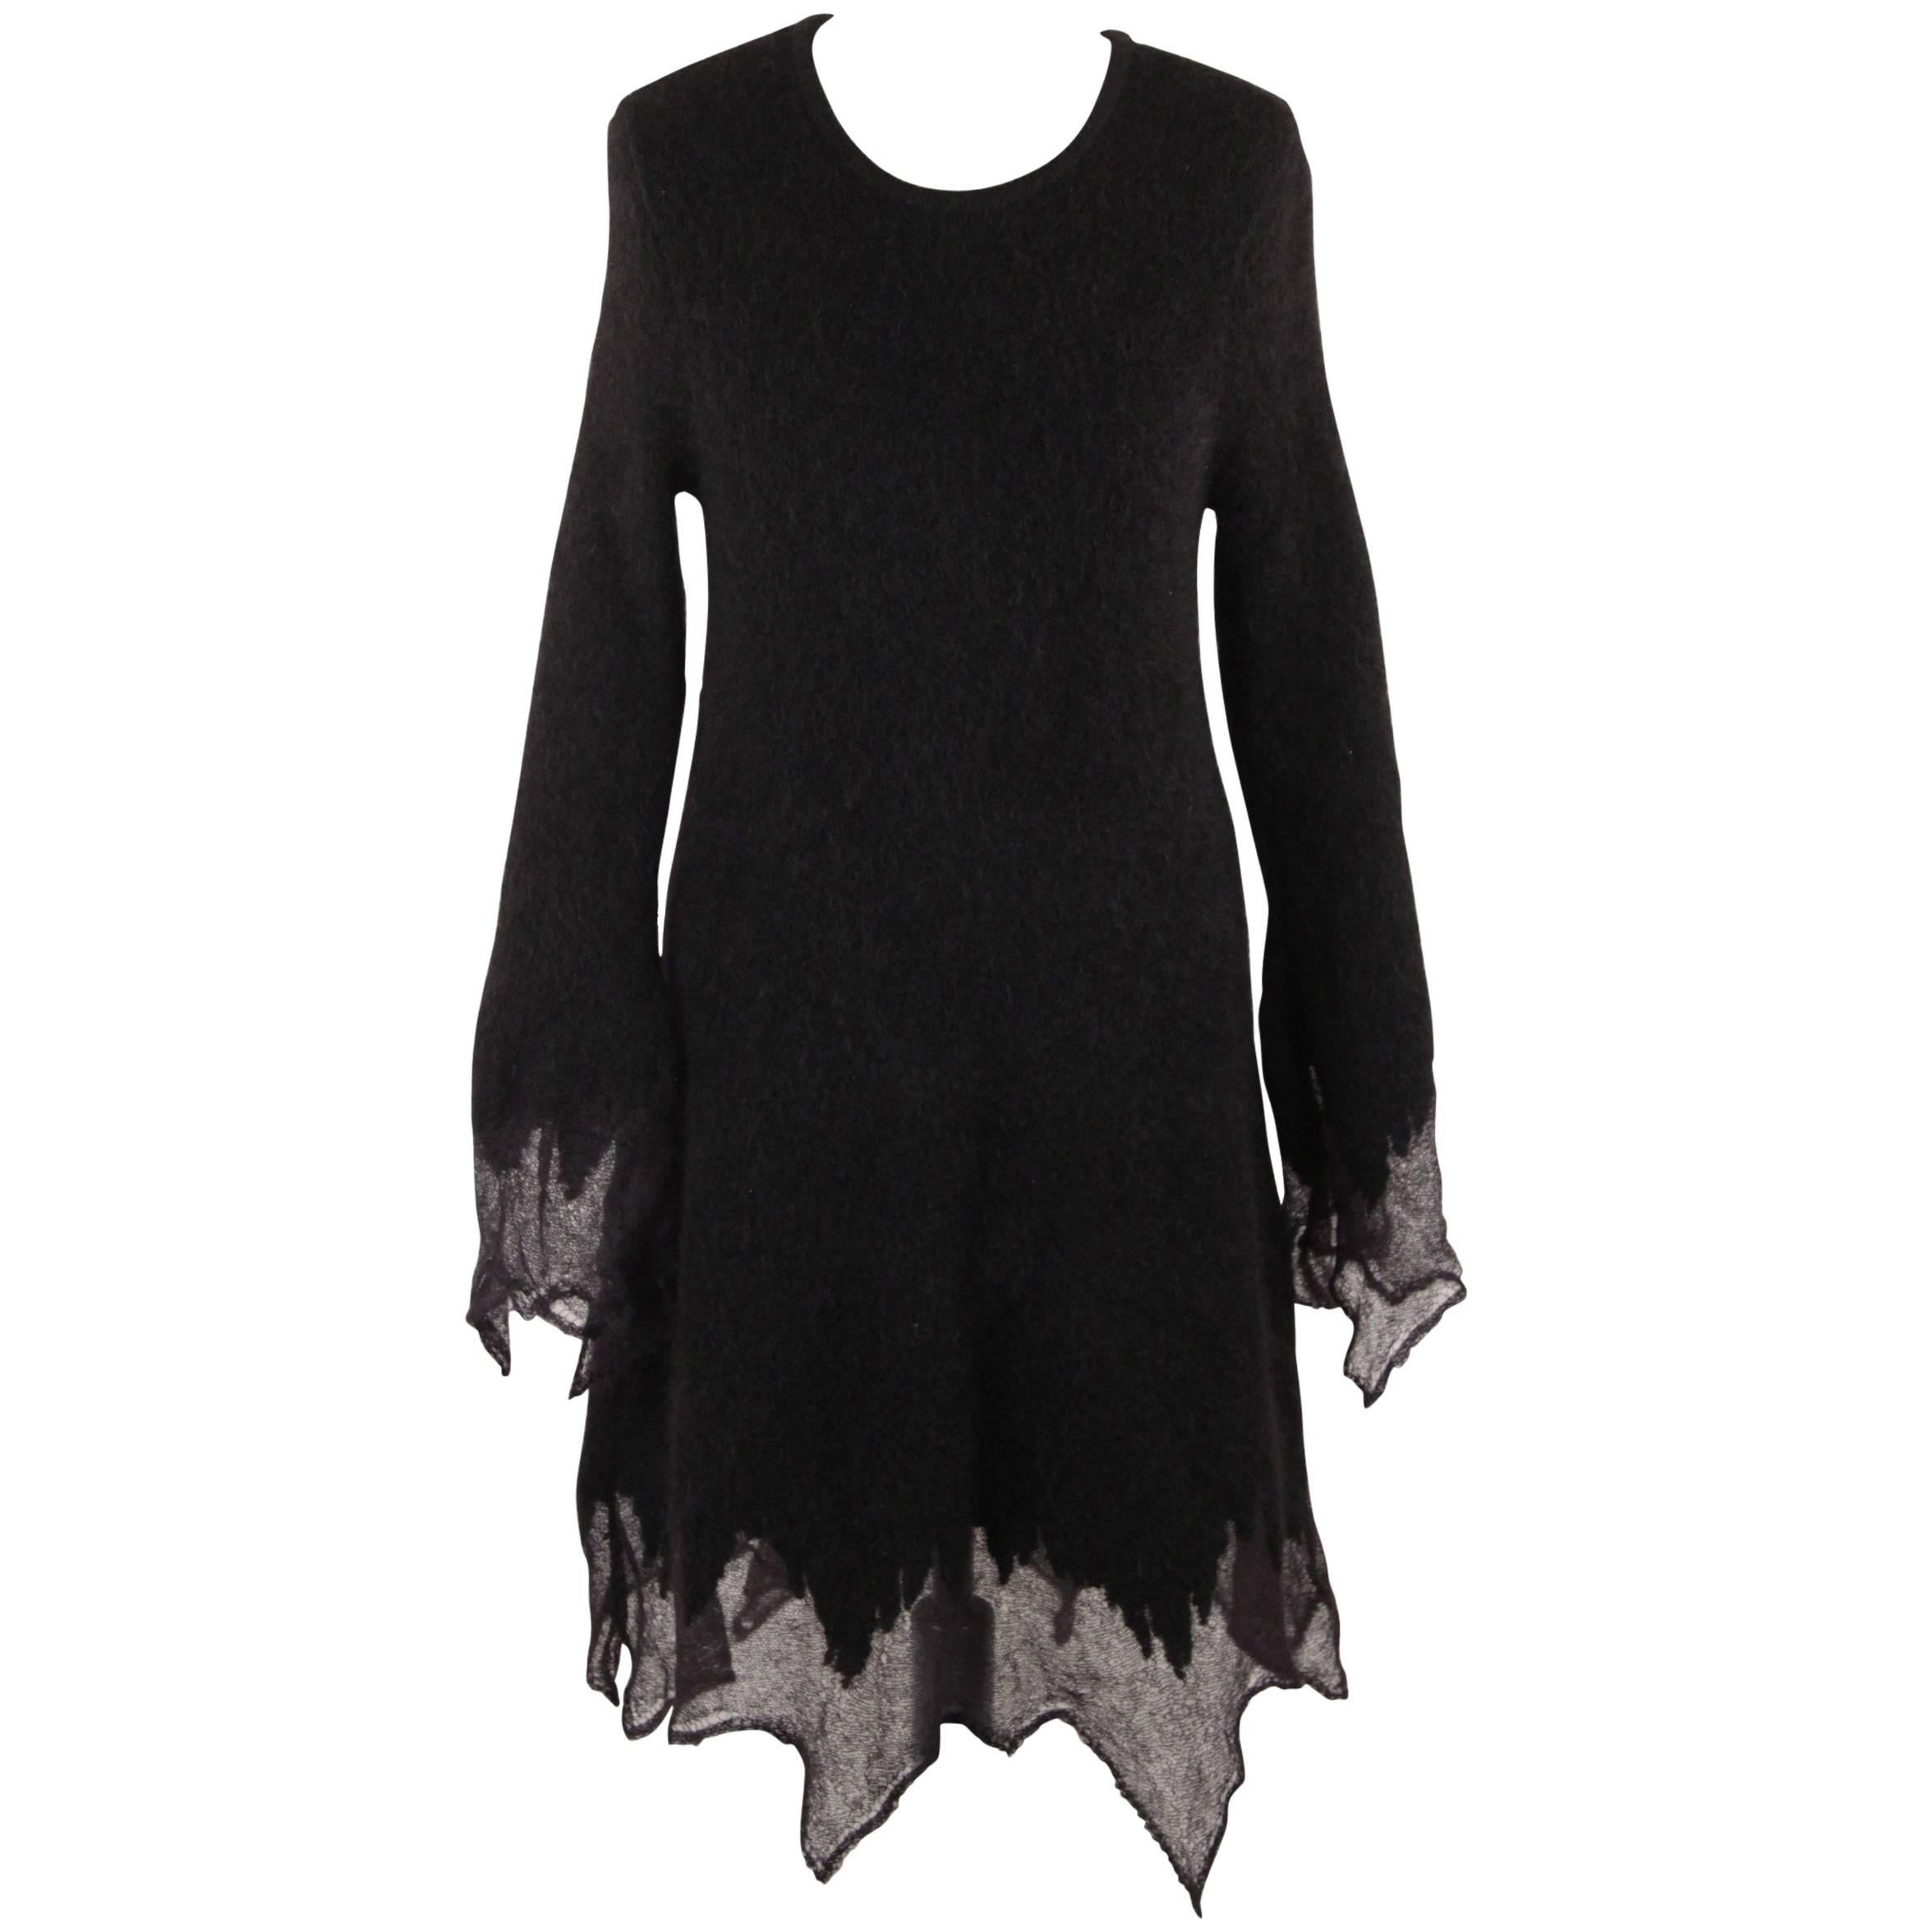 CHANEL Black Mohair ASYMMETRICAL DRESS Long Sleeve FALL 2009